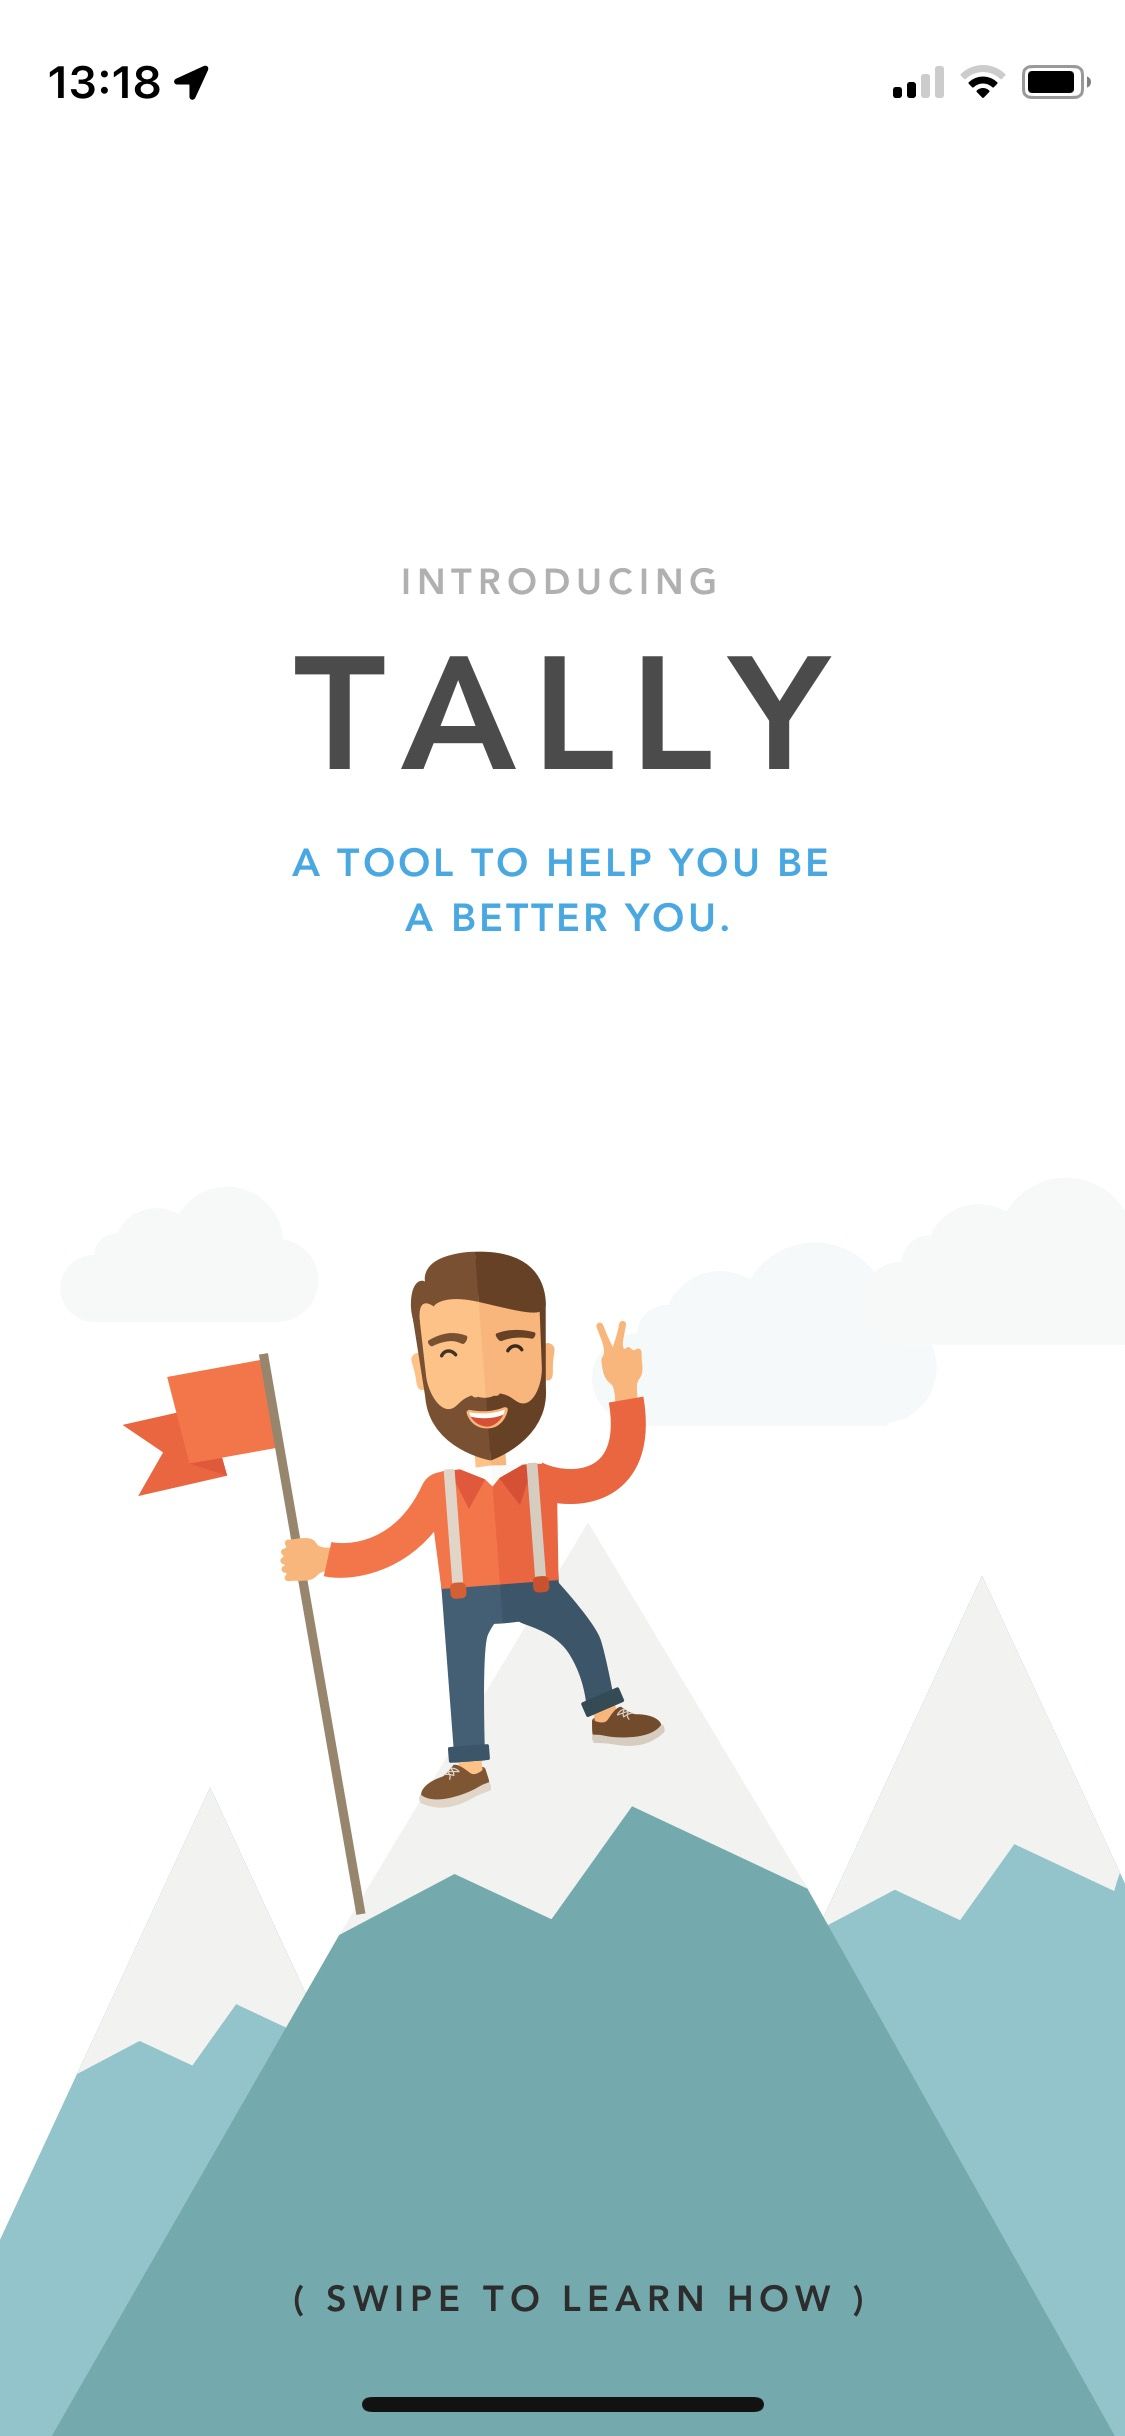 Screenshot of Tally app showing welcome screen